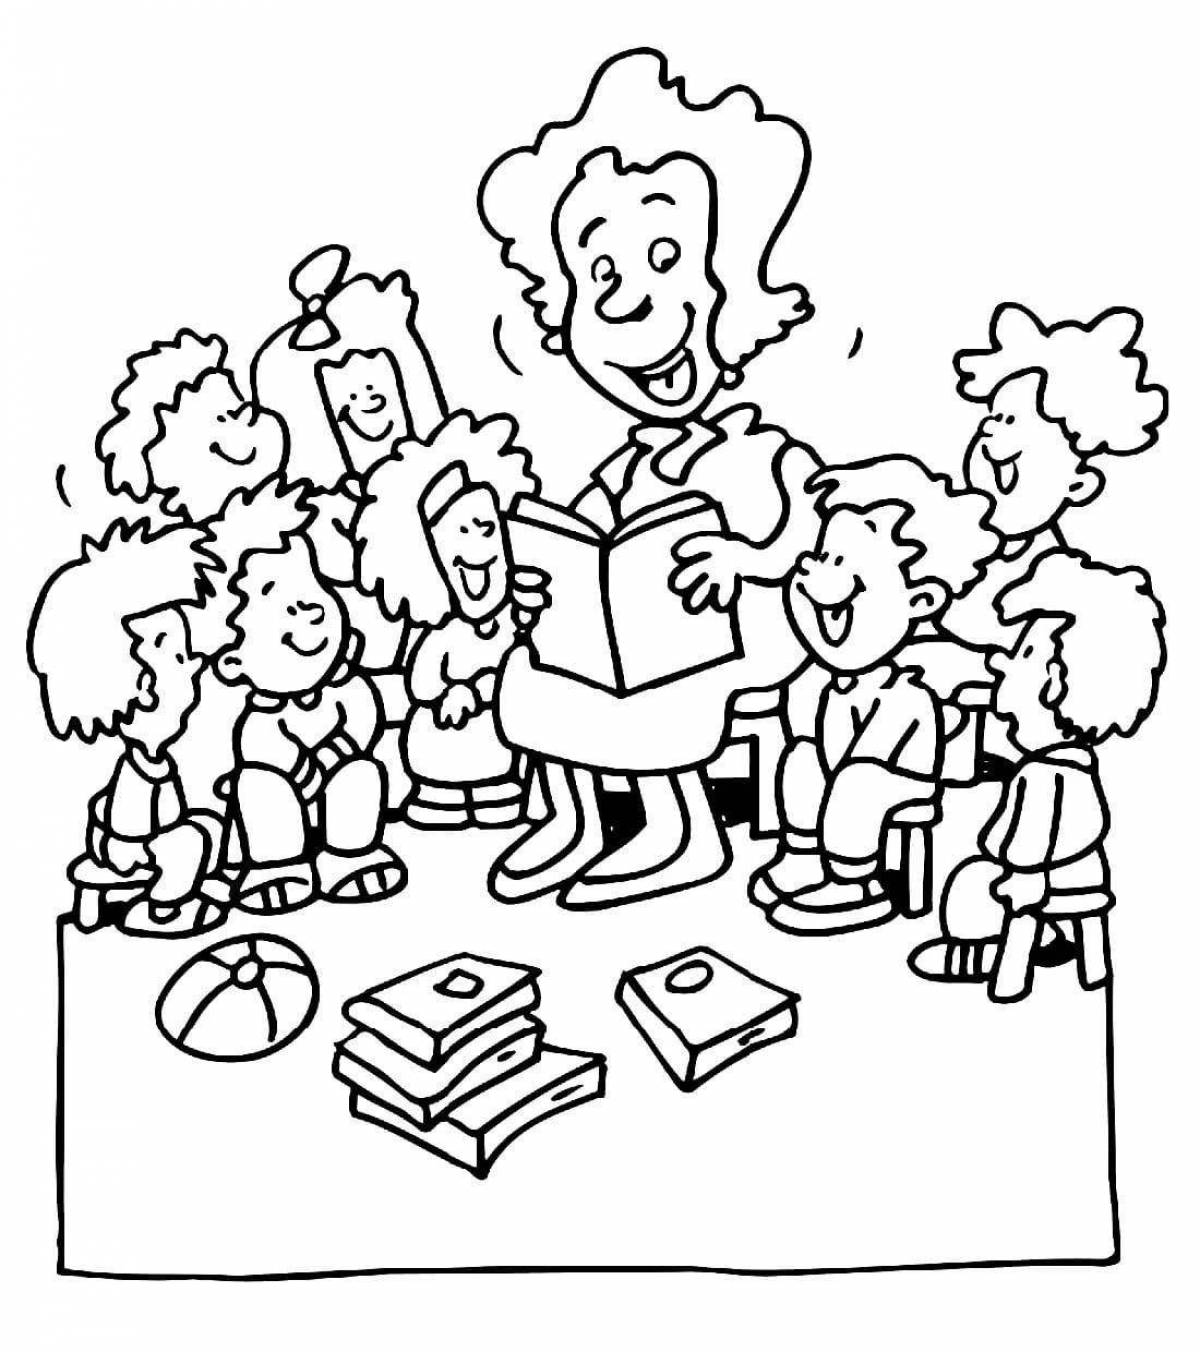 Kindergarten teacher and children #11